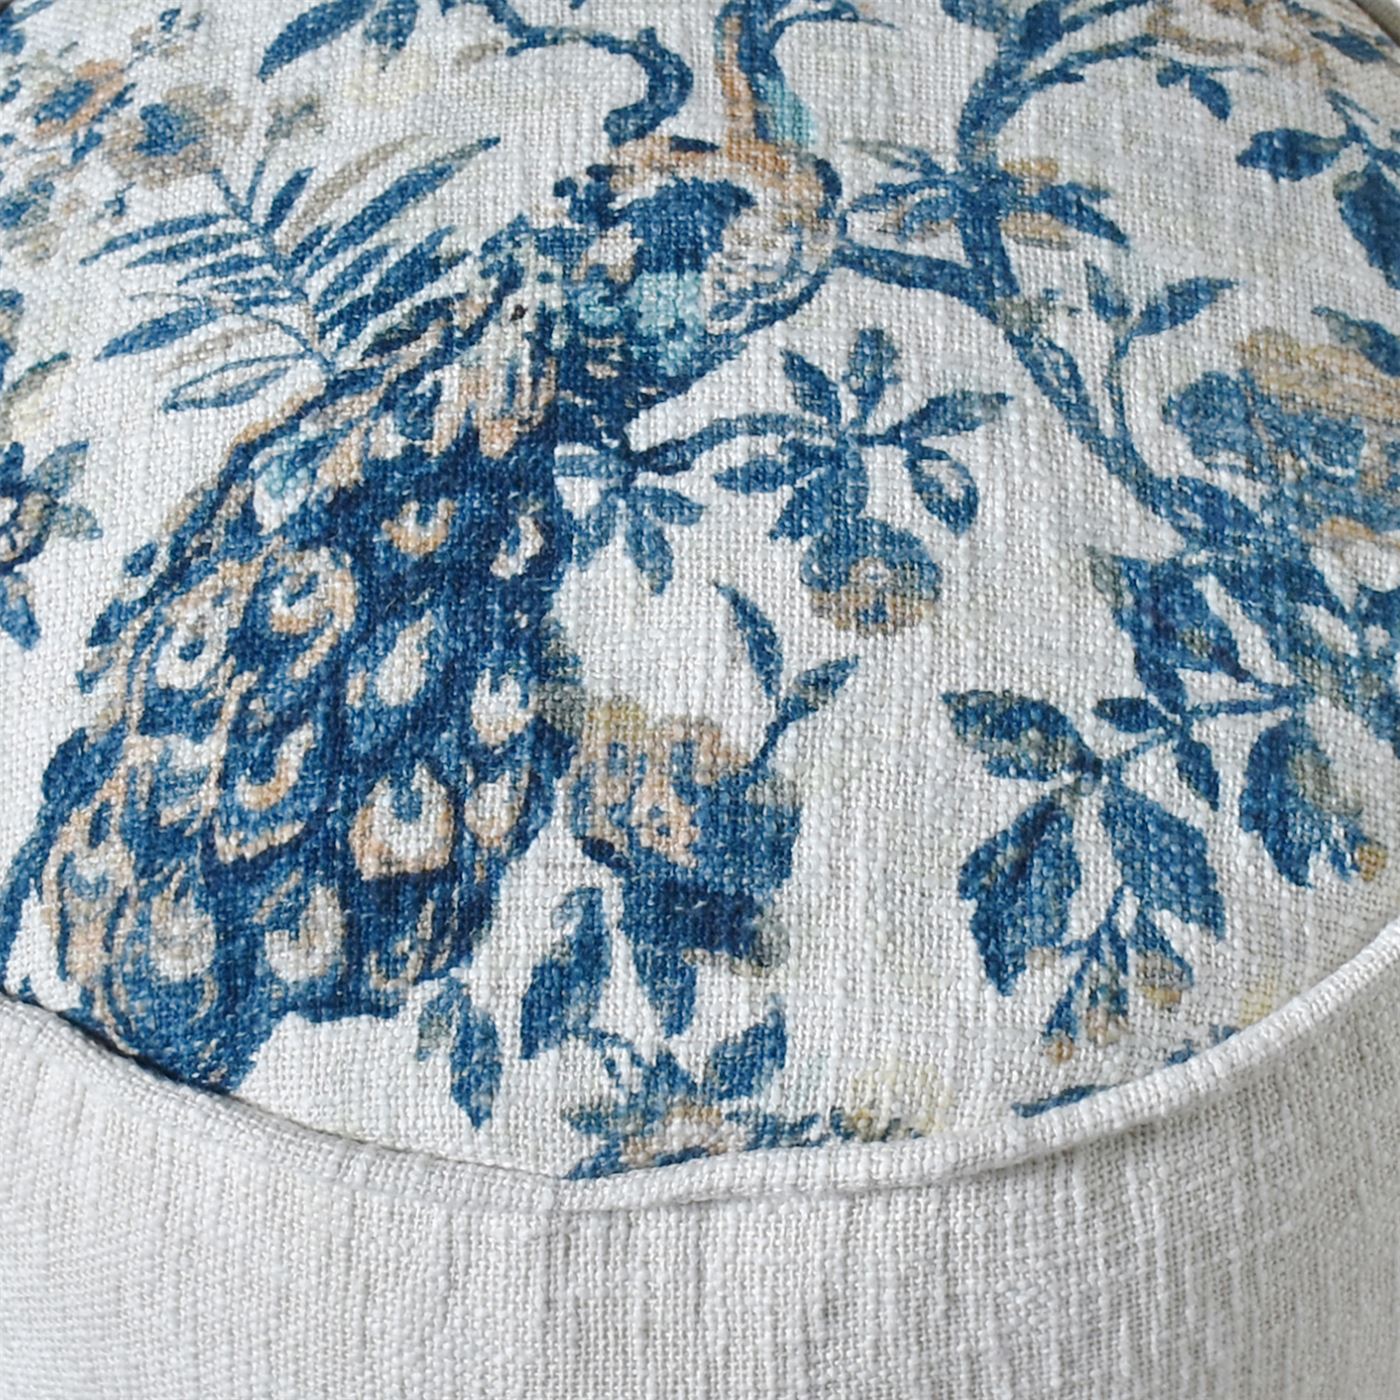 Tenri Pouf, Cotton, Natural White/Blue, Hand woven, All Loop 